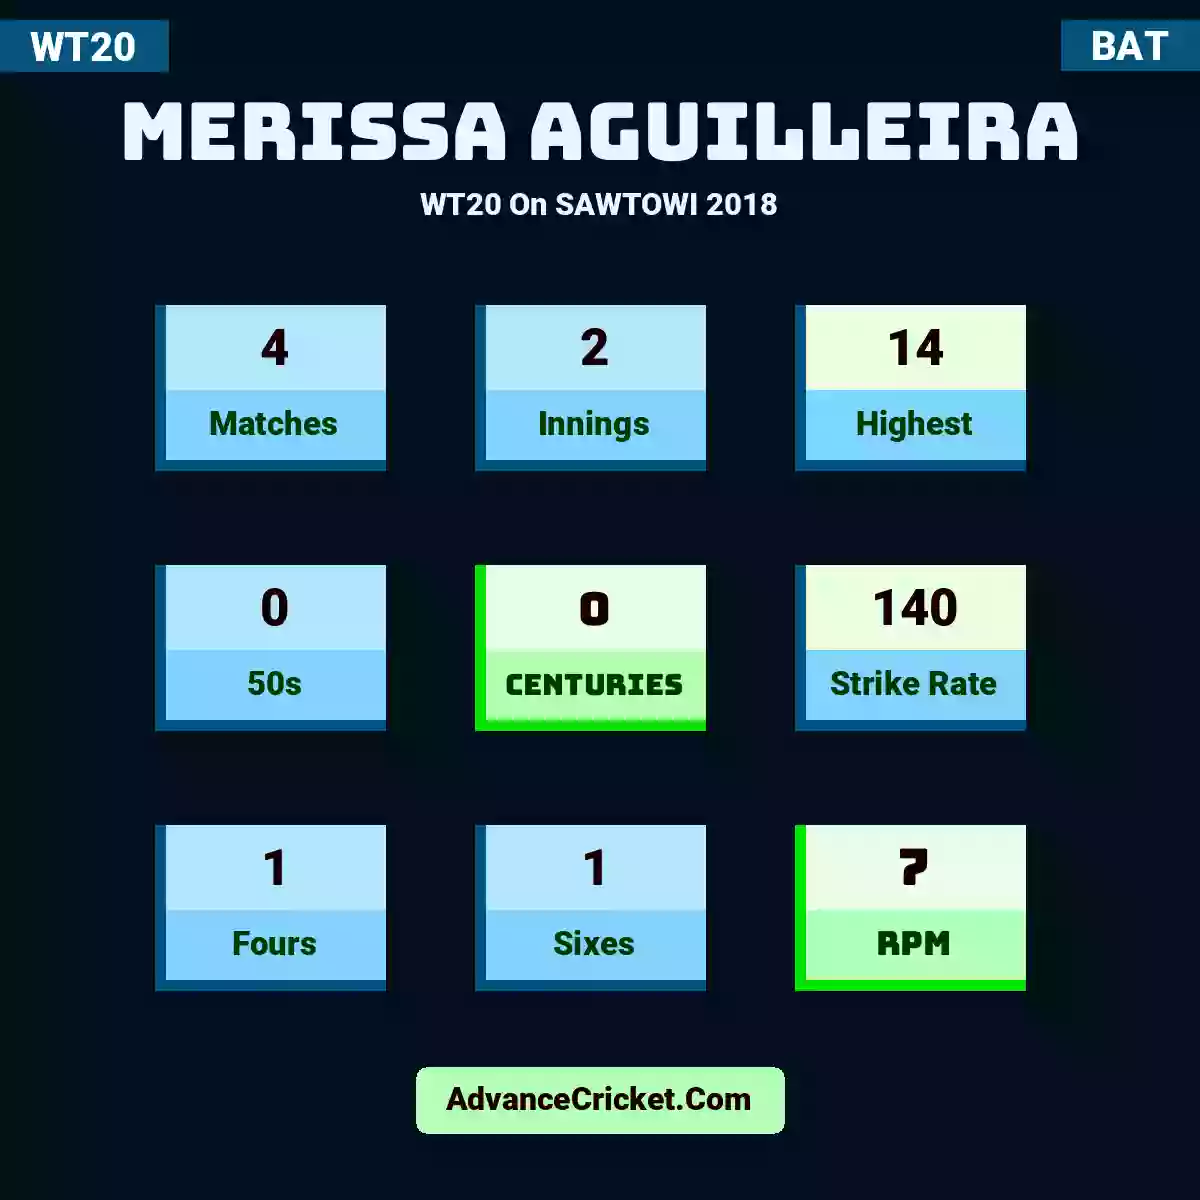 Merissa Aguilleira WT20  On SAWTOWI 2018, Merissa Aguilleira played 4 matches, scored 14 runs as highest, 0 half-centuries, and 0 centuries, with a strike rate of 140. M.Aguilleira hit 1 fours and 1 sixes, with an RPM of 7.